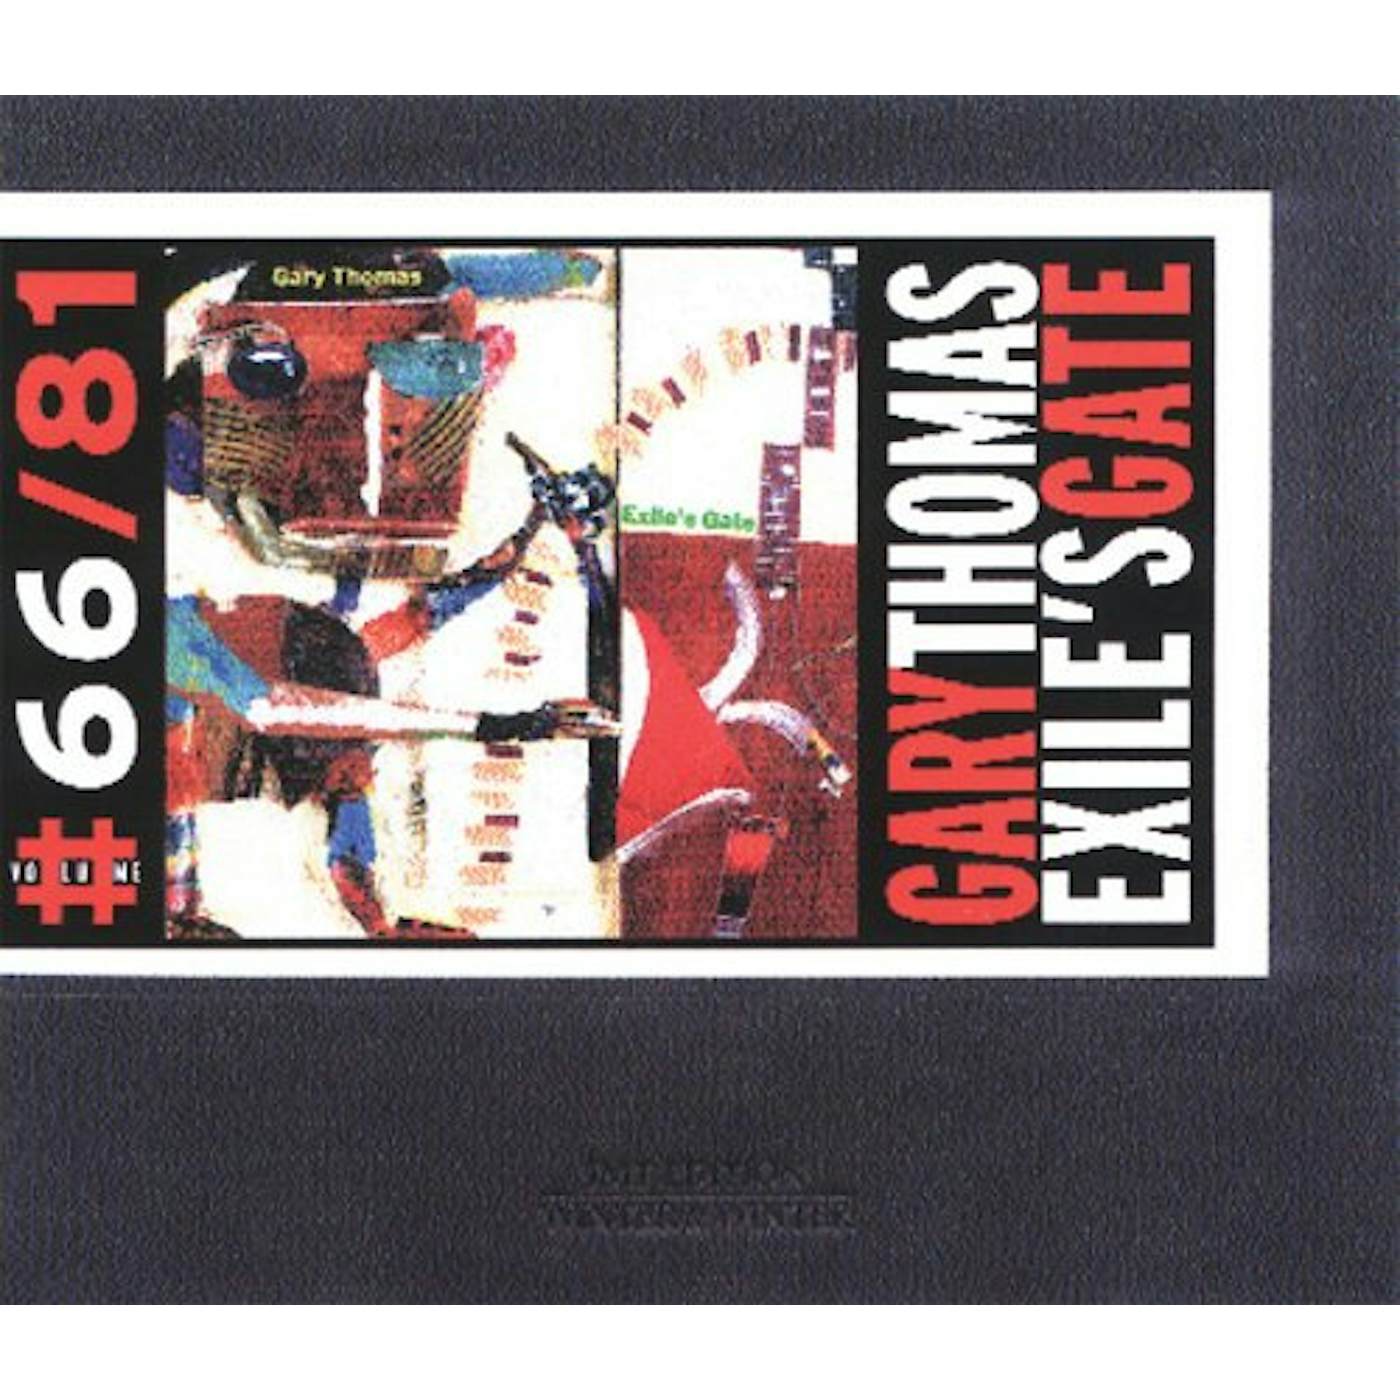 Gary Thomas EXILE'S GATE CD